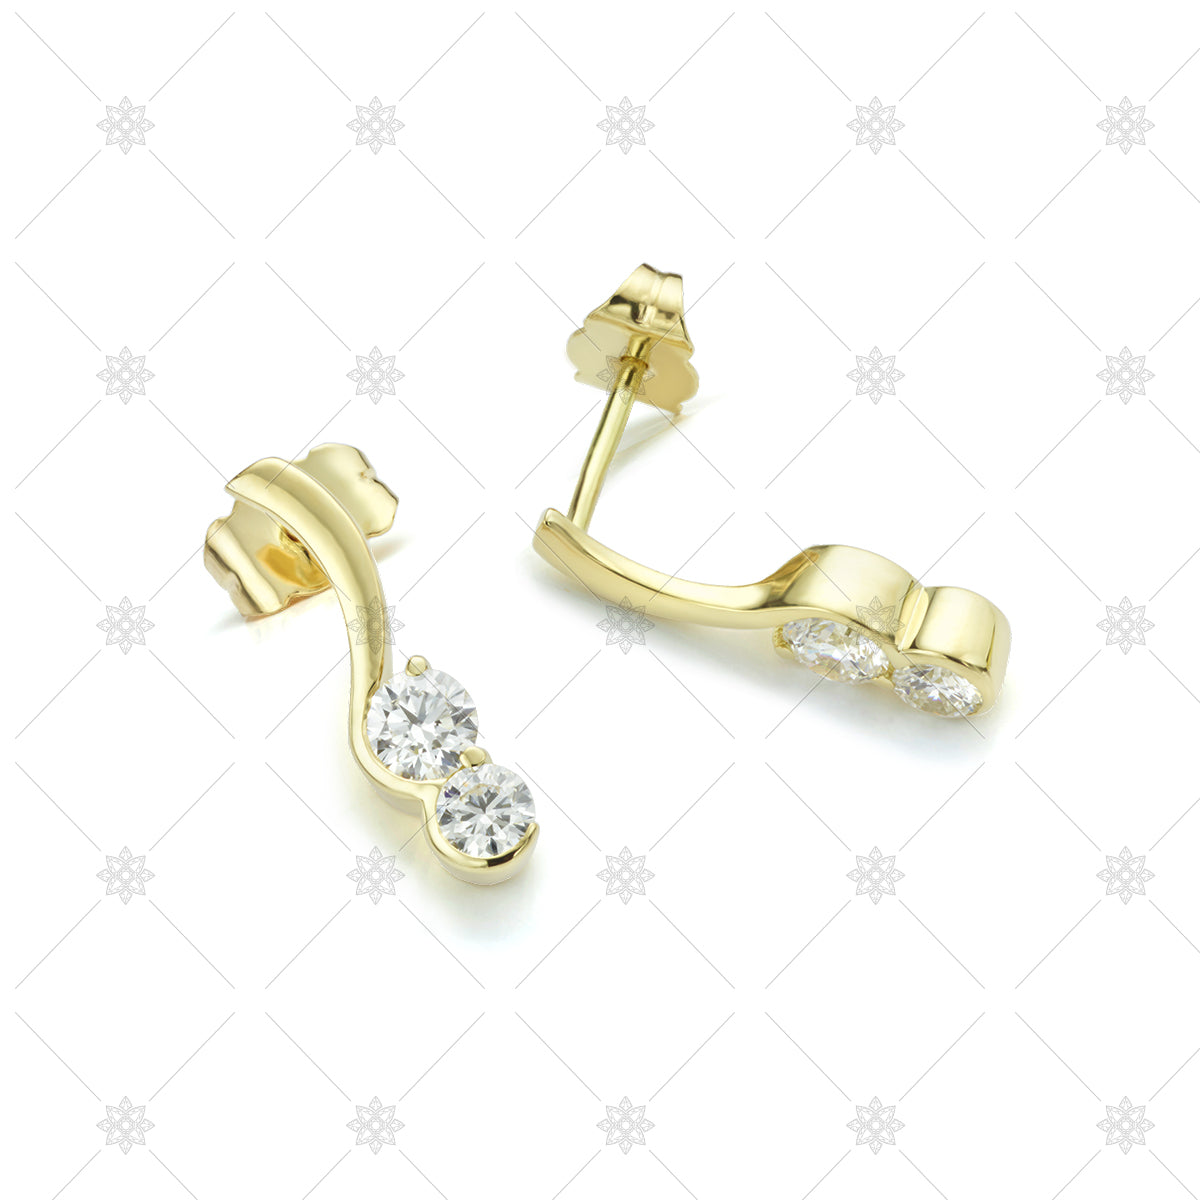 Diamond Earrings image for download